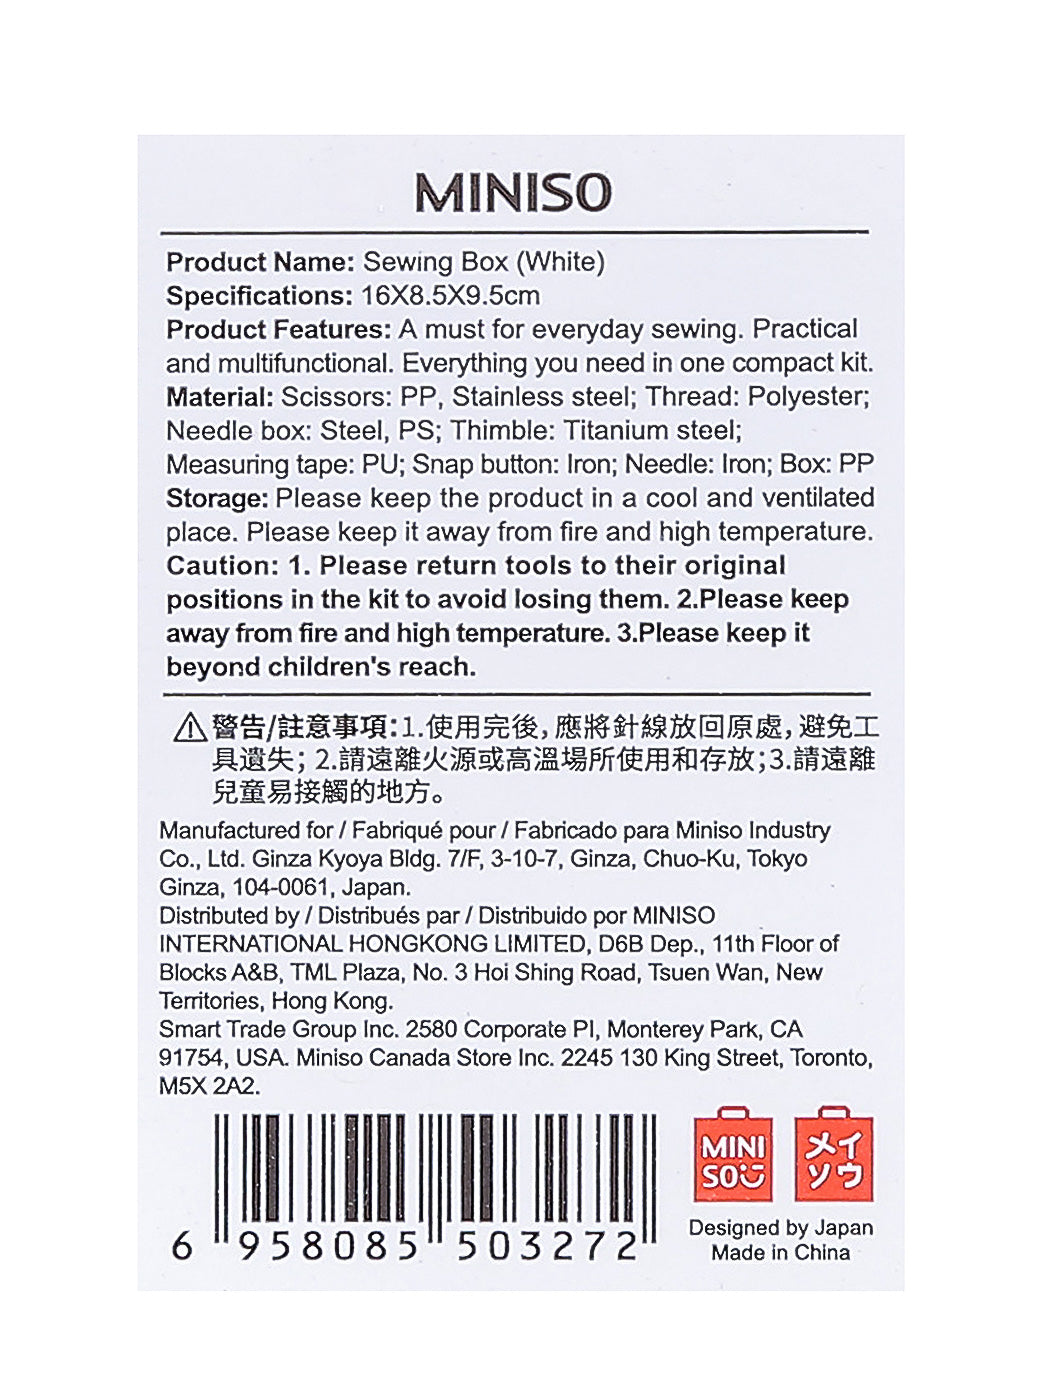 MINISO SEWING BOX ( WHITE ) 0100000898 SEWING SET